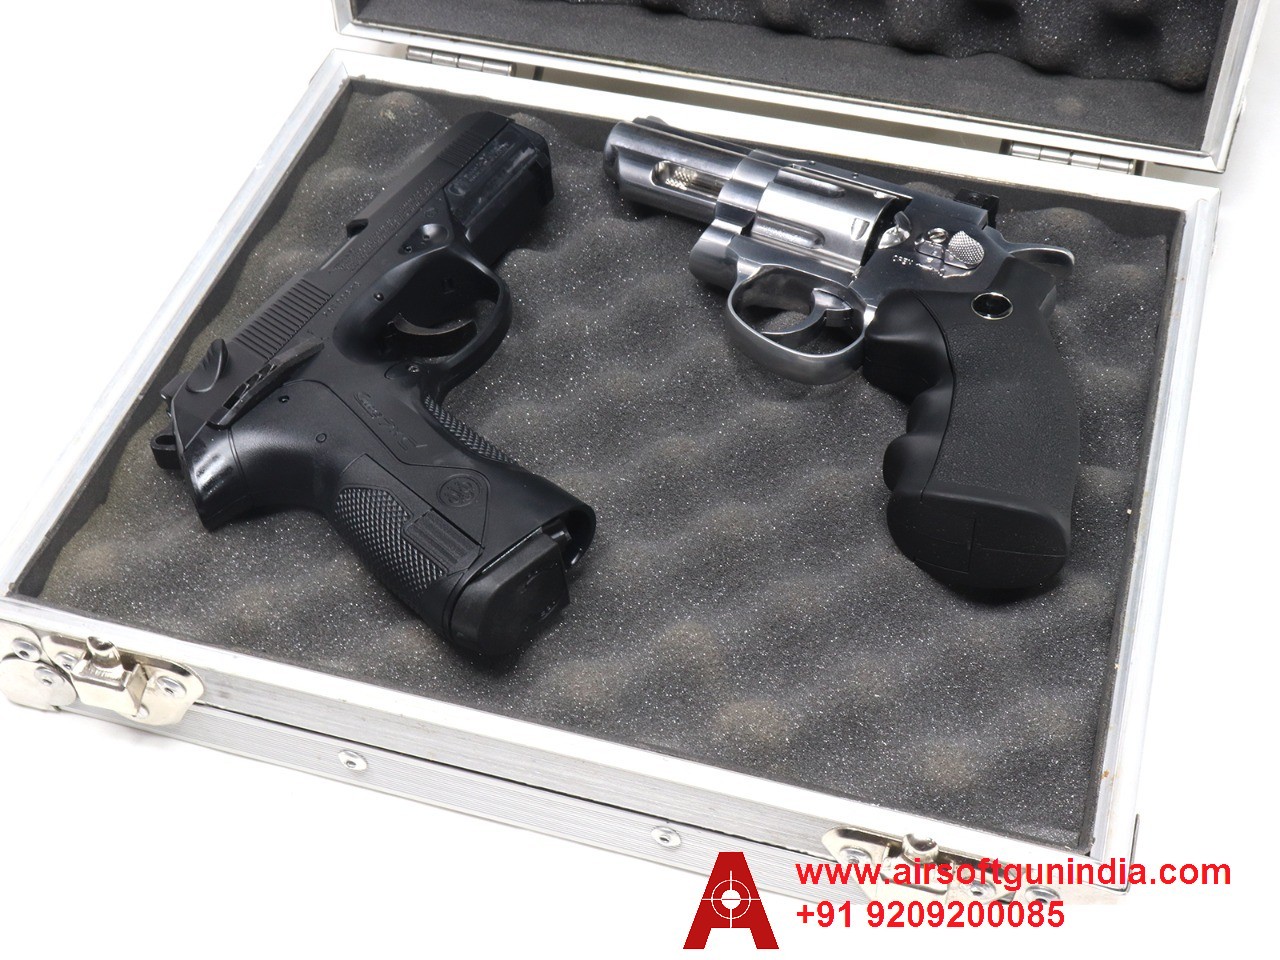 PREMIUM QUALITY PISTOL /REVOLVER PROTECTIVE METAL GUN BOX BY AIRSOFT GUN INDIA ( SILVER )